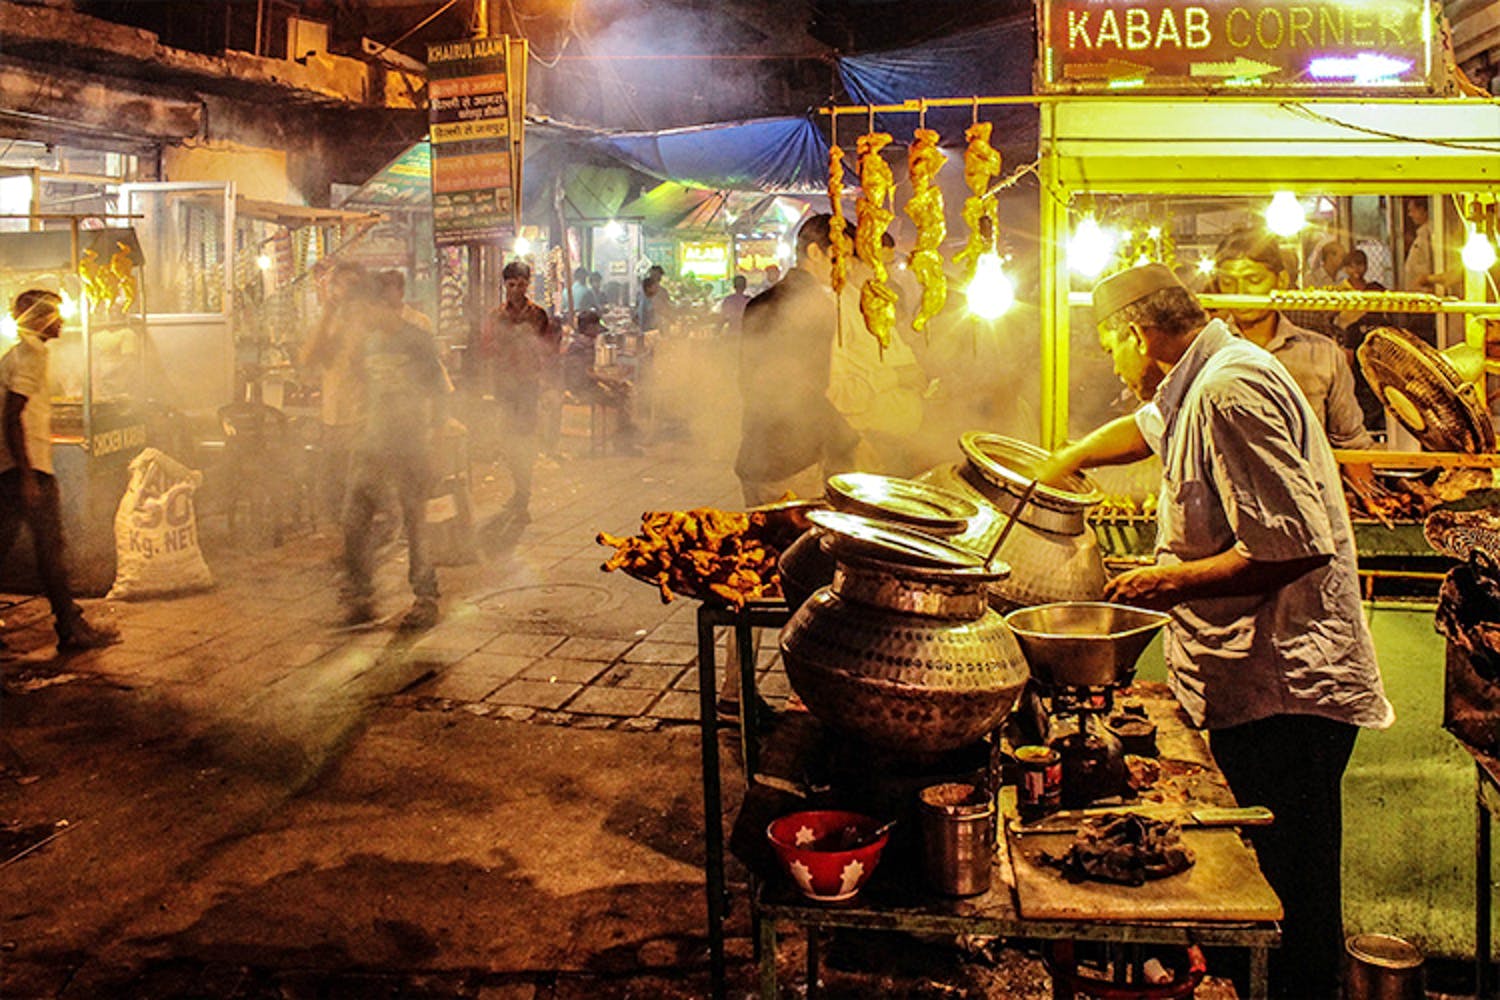 Public space,Market,Night,Bazaar,Street food,Street,Marketplace,City,Hawker,Dai pai dong